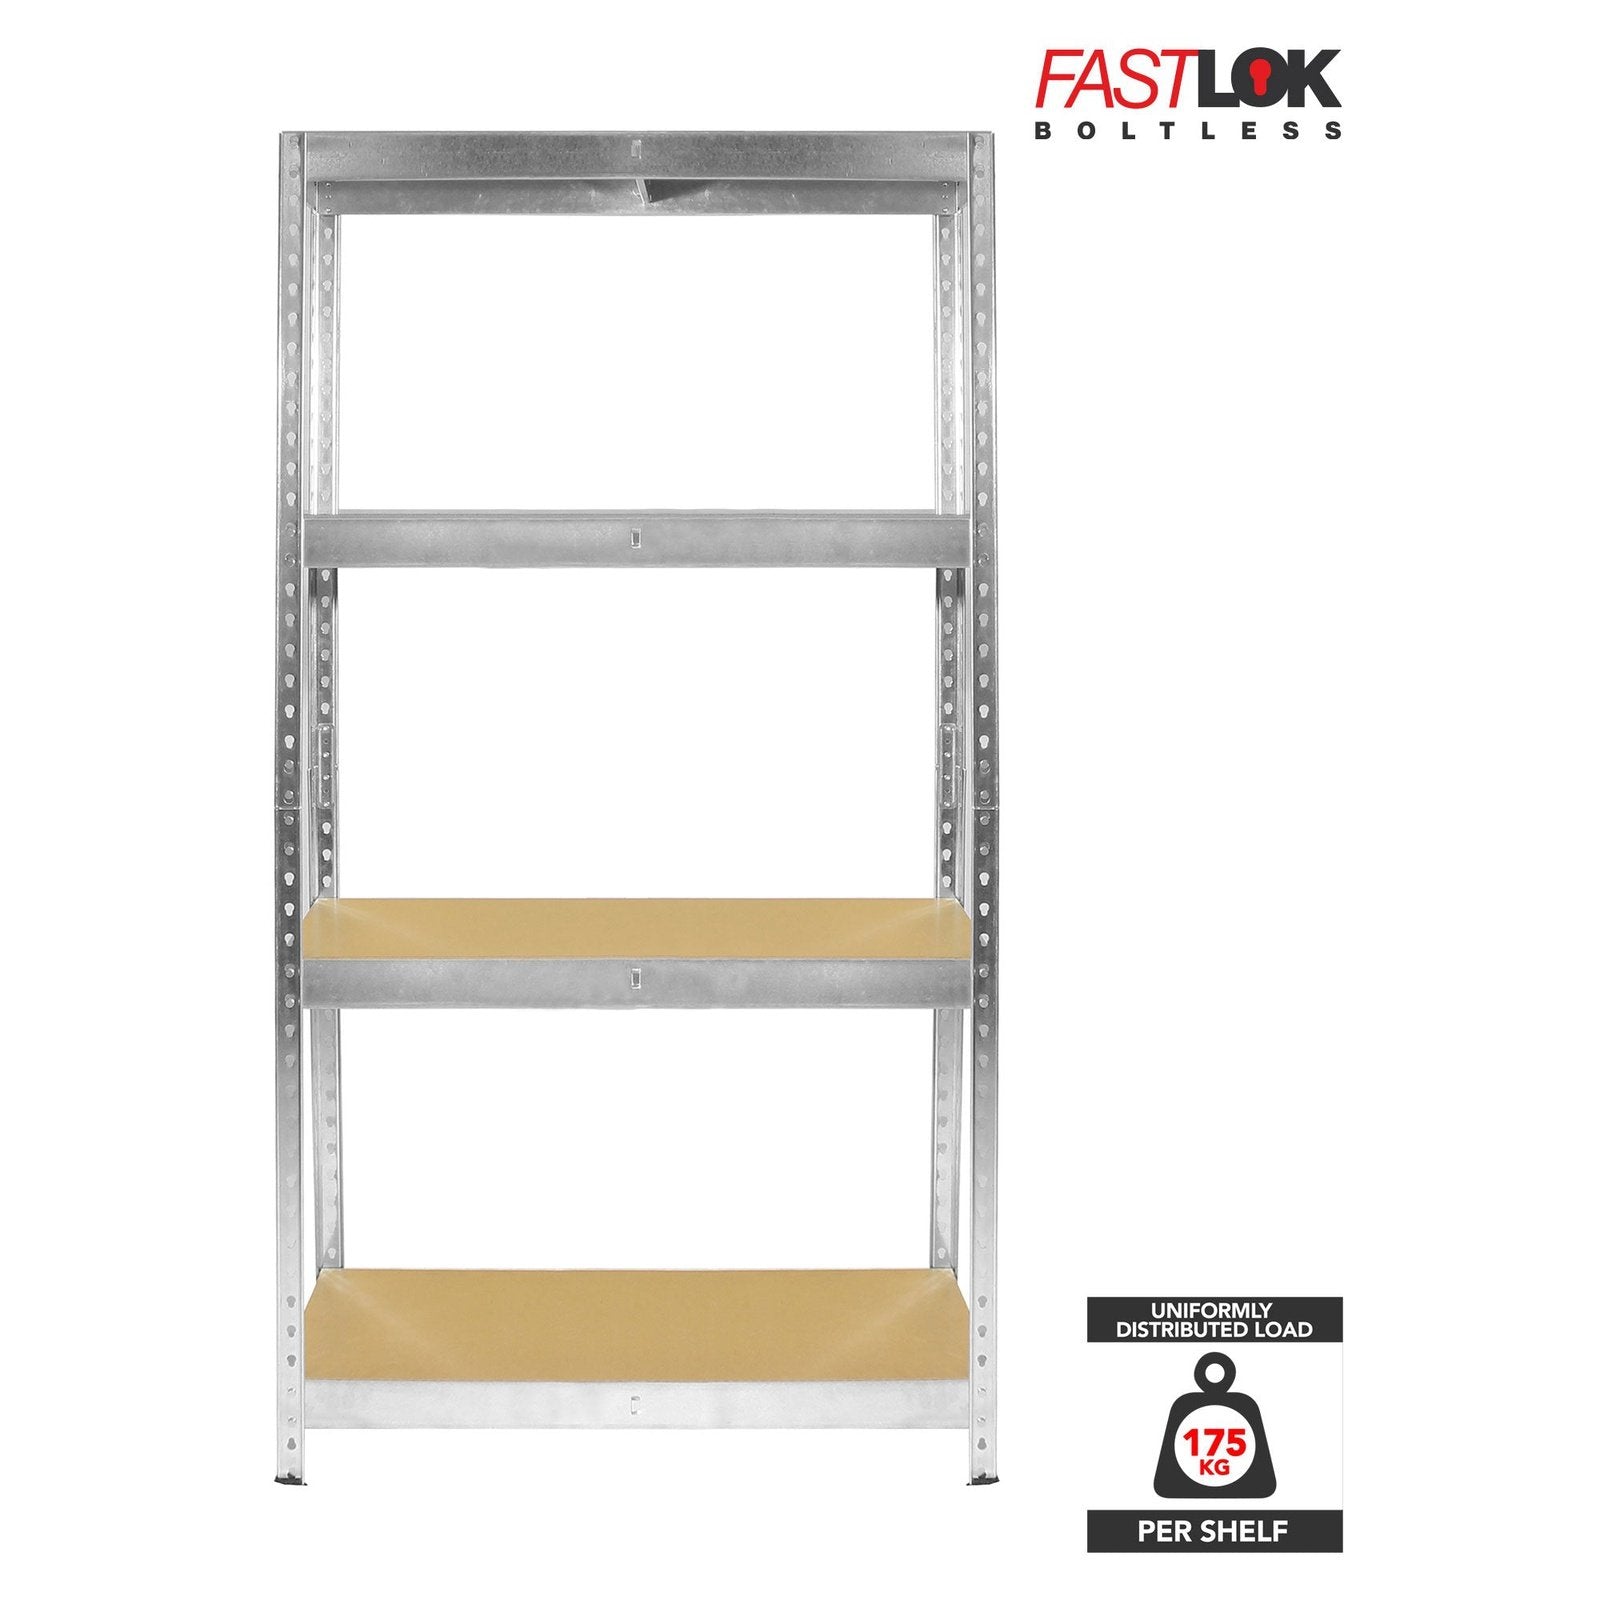 RB Boss FastLok 4x Tier Shelving Unit - 1600x750x350mm 175kgs UDL - Office Products Online